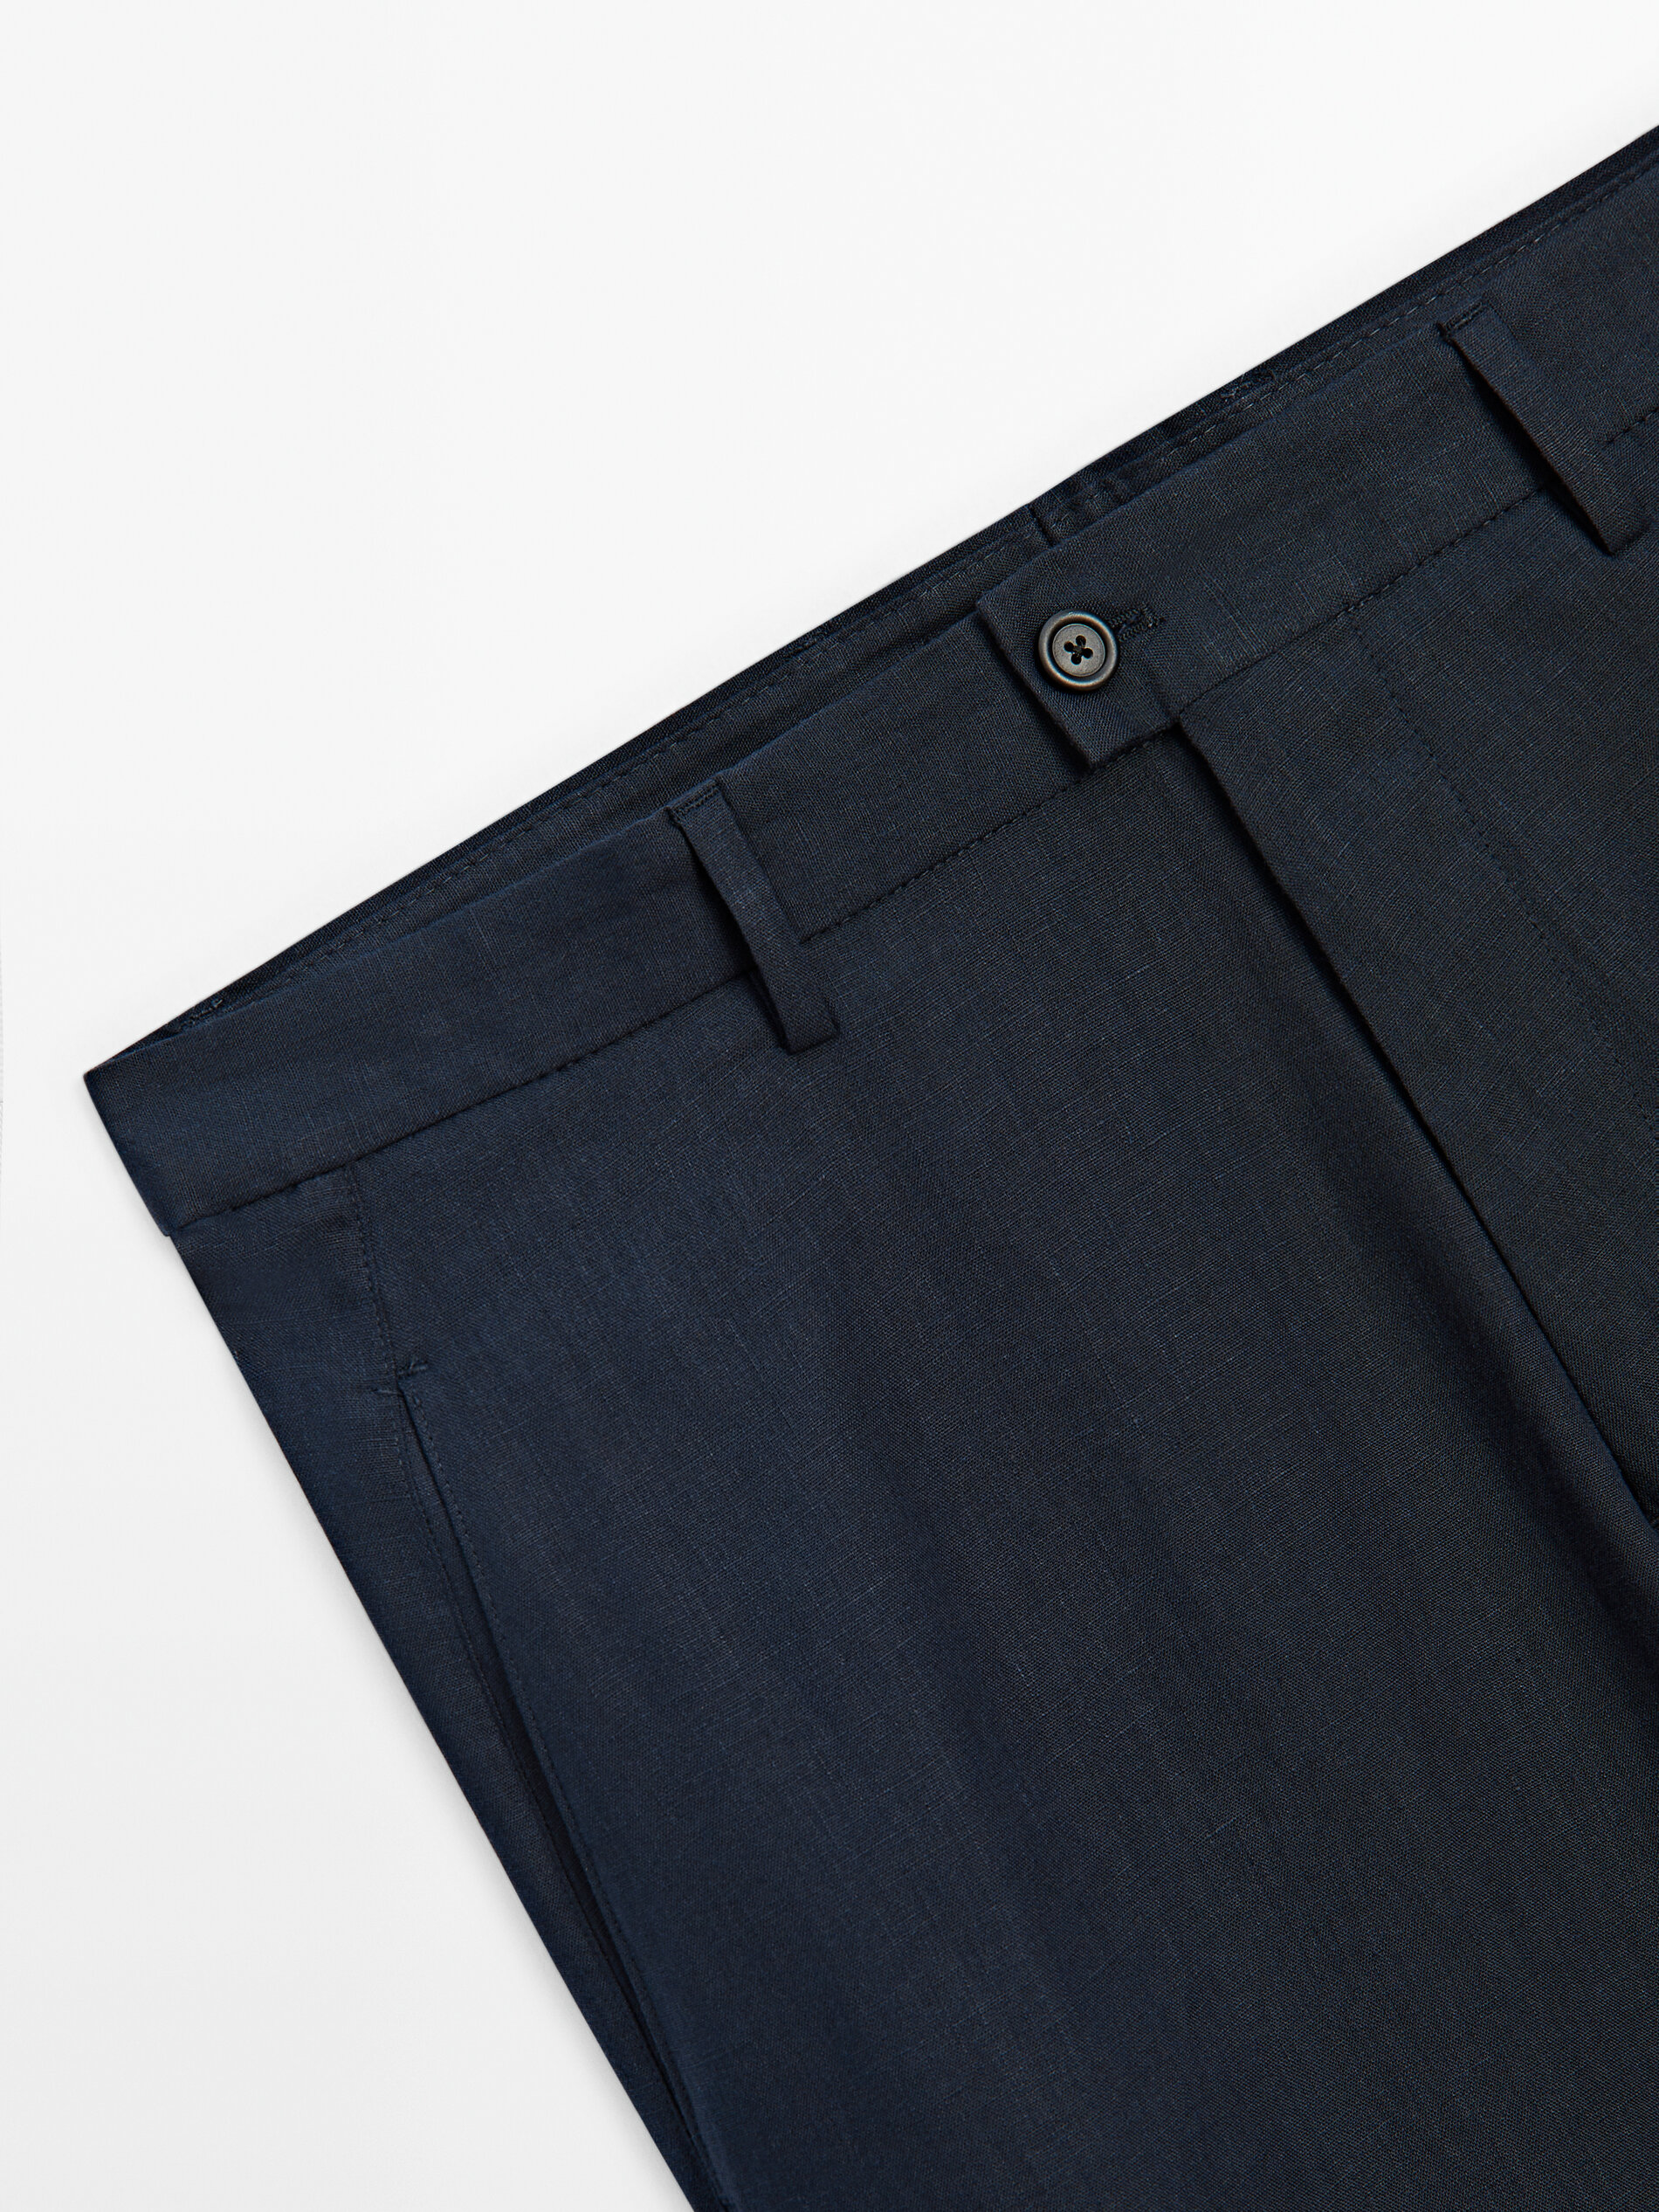 Banana Republic Men's Slim Tapered 100% Linen Suit Trouser Pants $159 NEW  33x30 | eBay